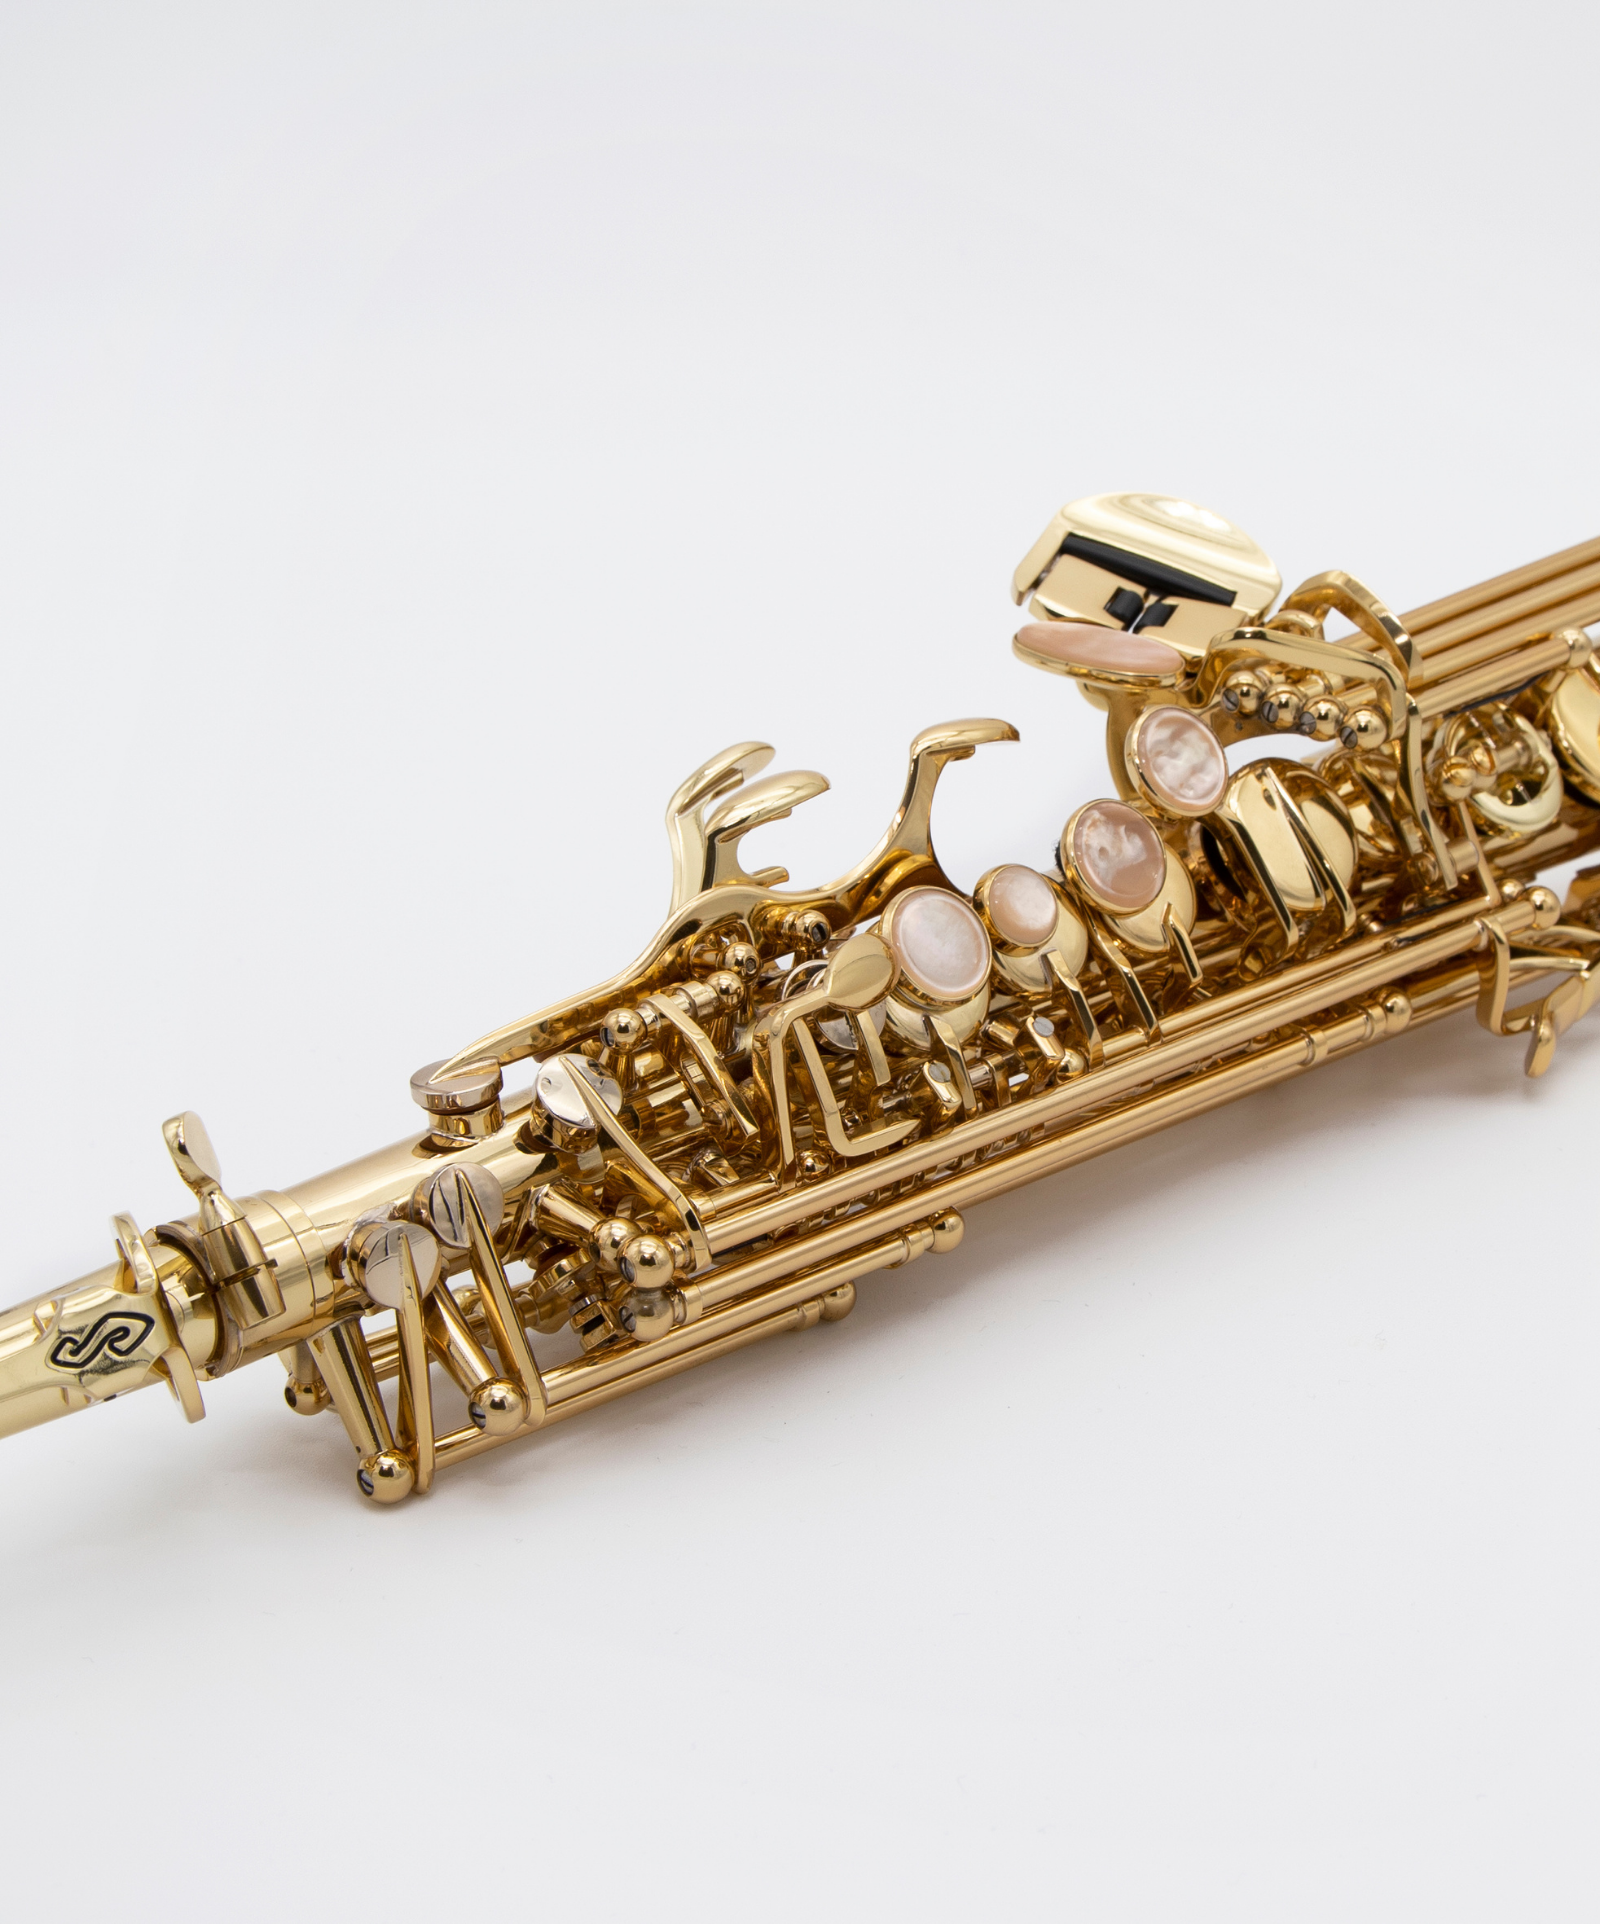 Saxophone baryton Série III - Henri SELMER Paris